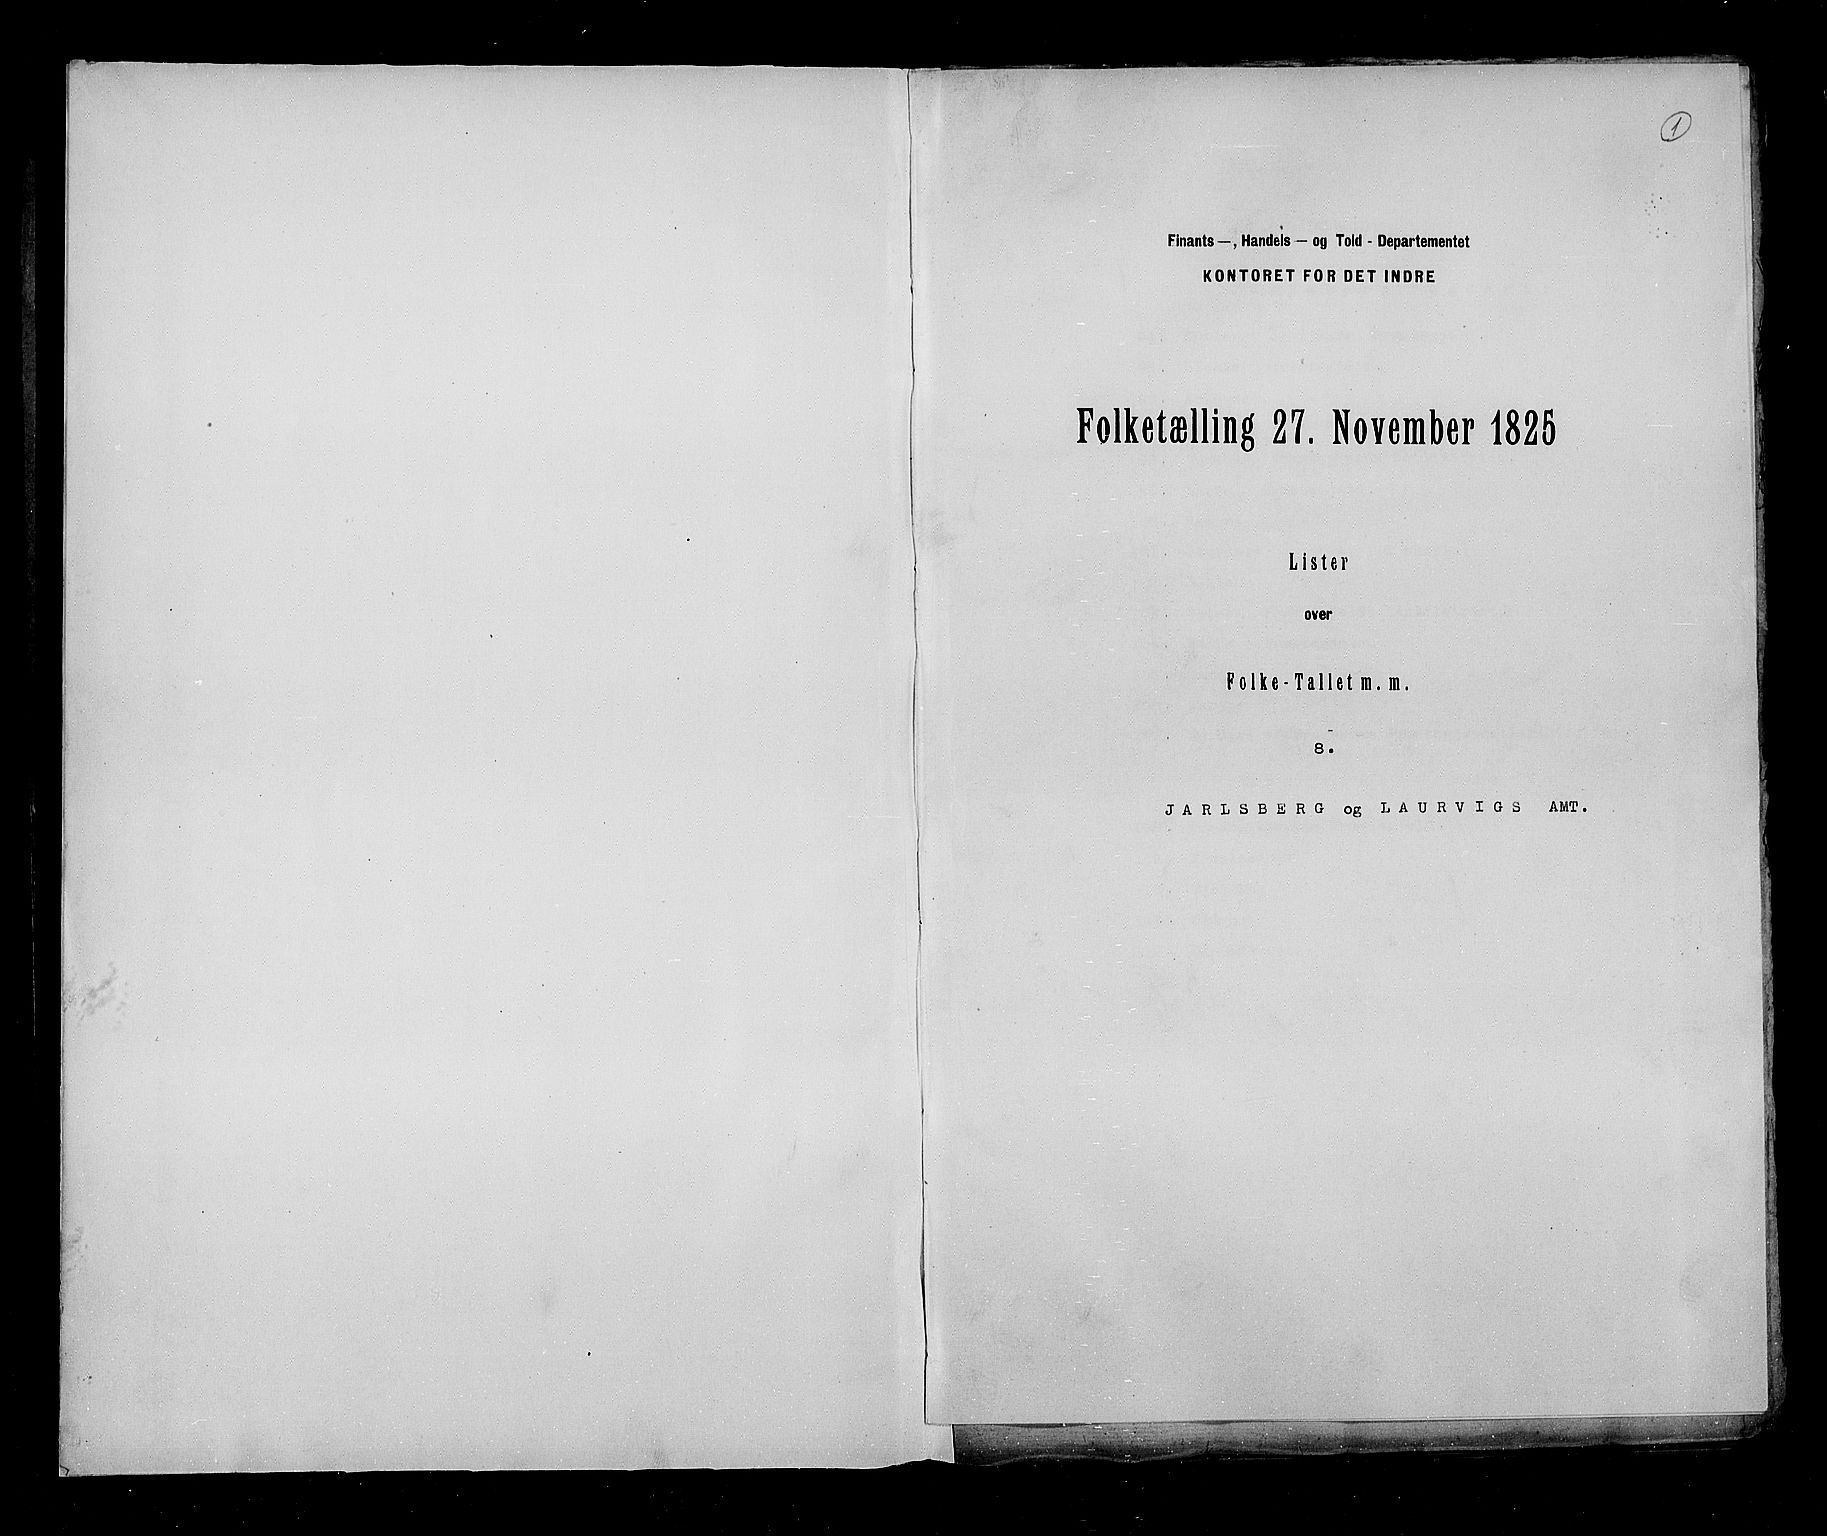 RA, Census 1825, vol. 8: Jarlsberg og Larvik amt, 1825, p. 1